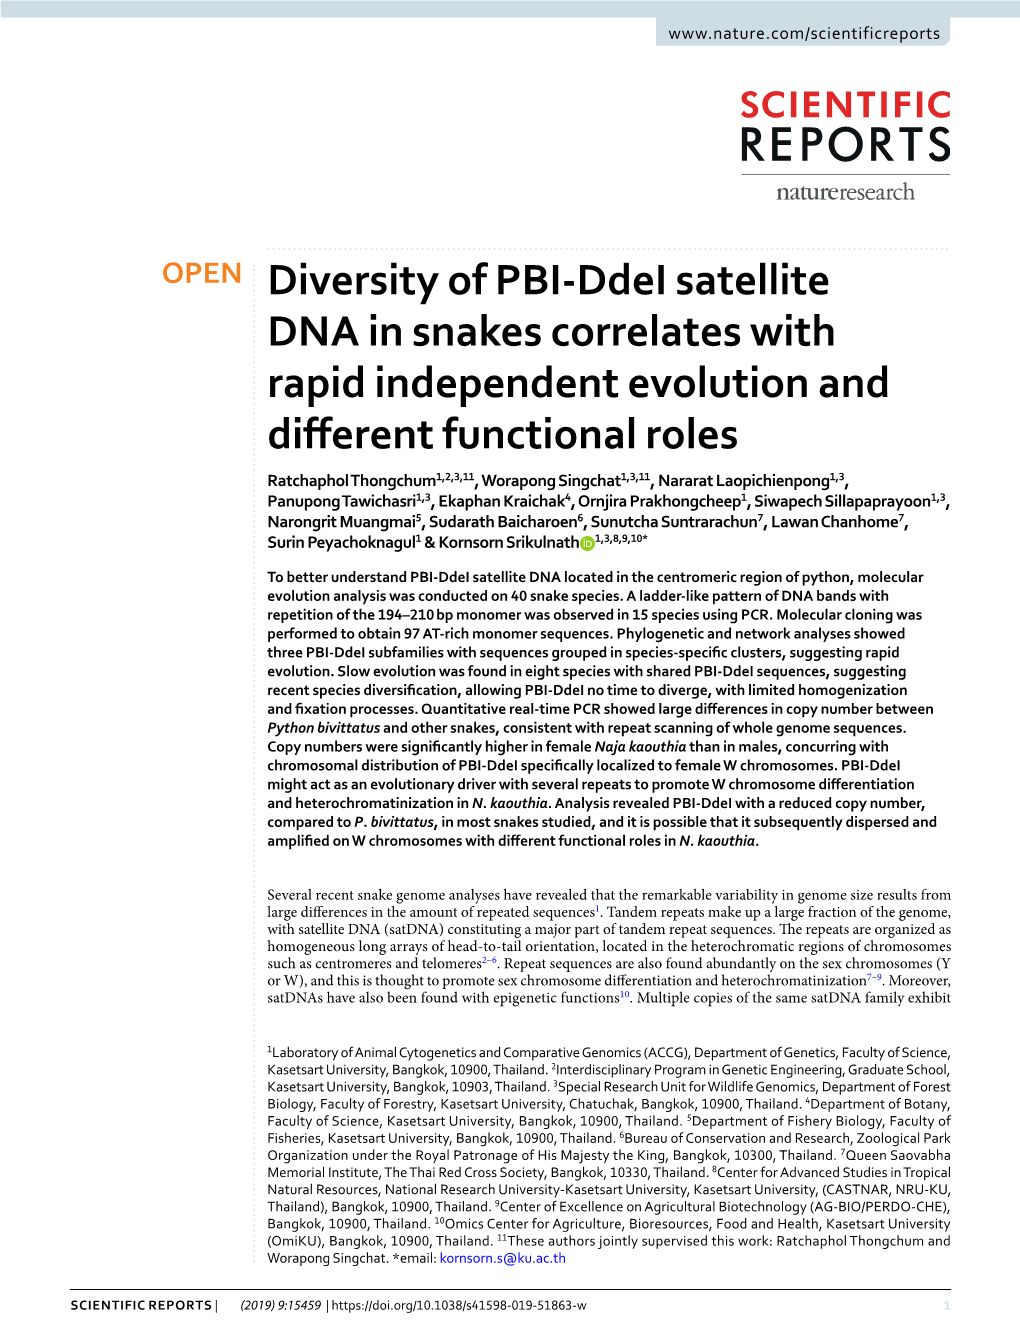 Diversity of PBI-Ddei Satellite DNA in Snakes Correlates With